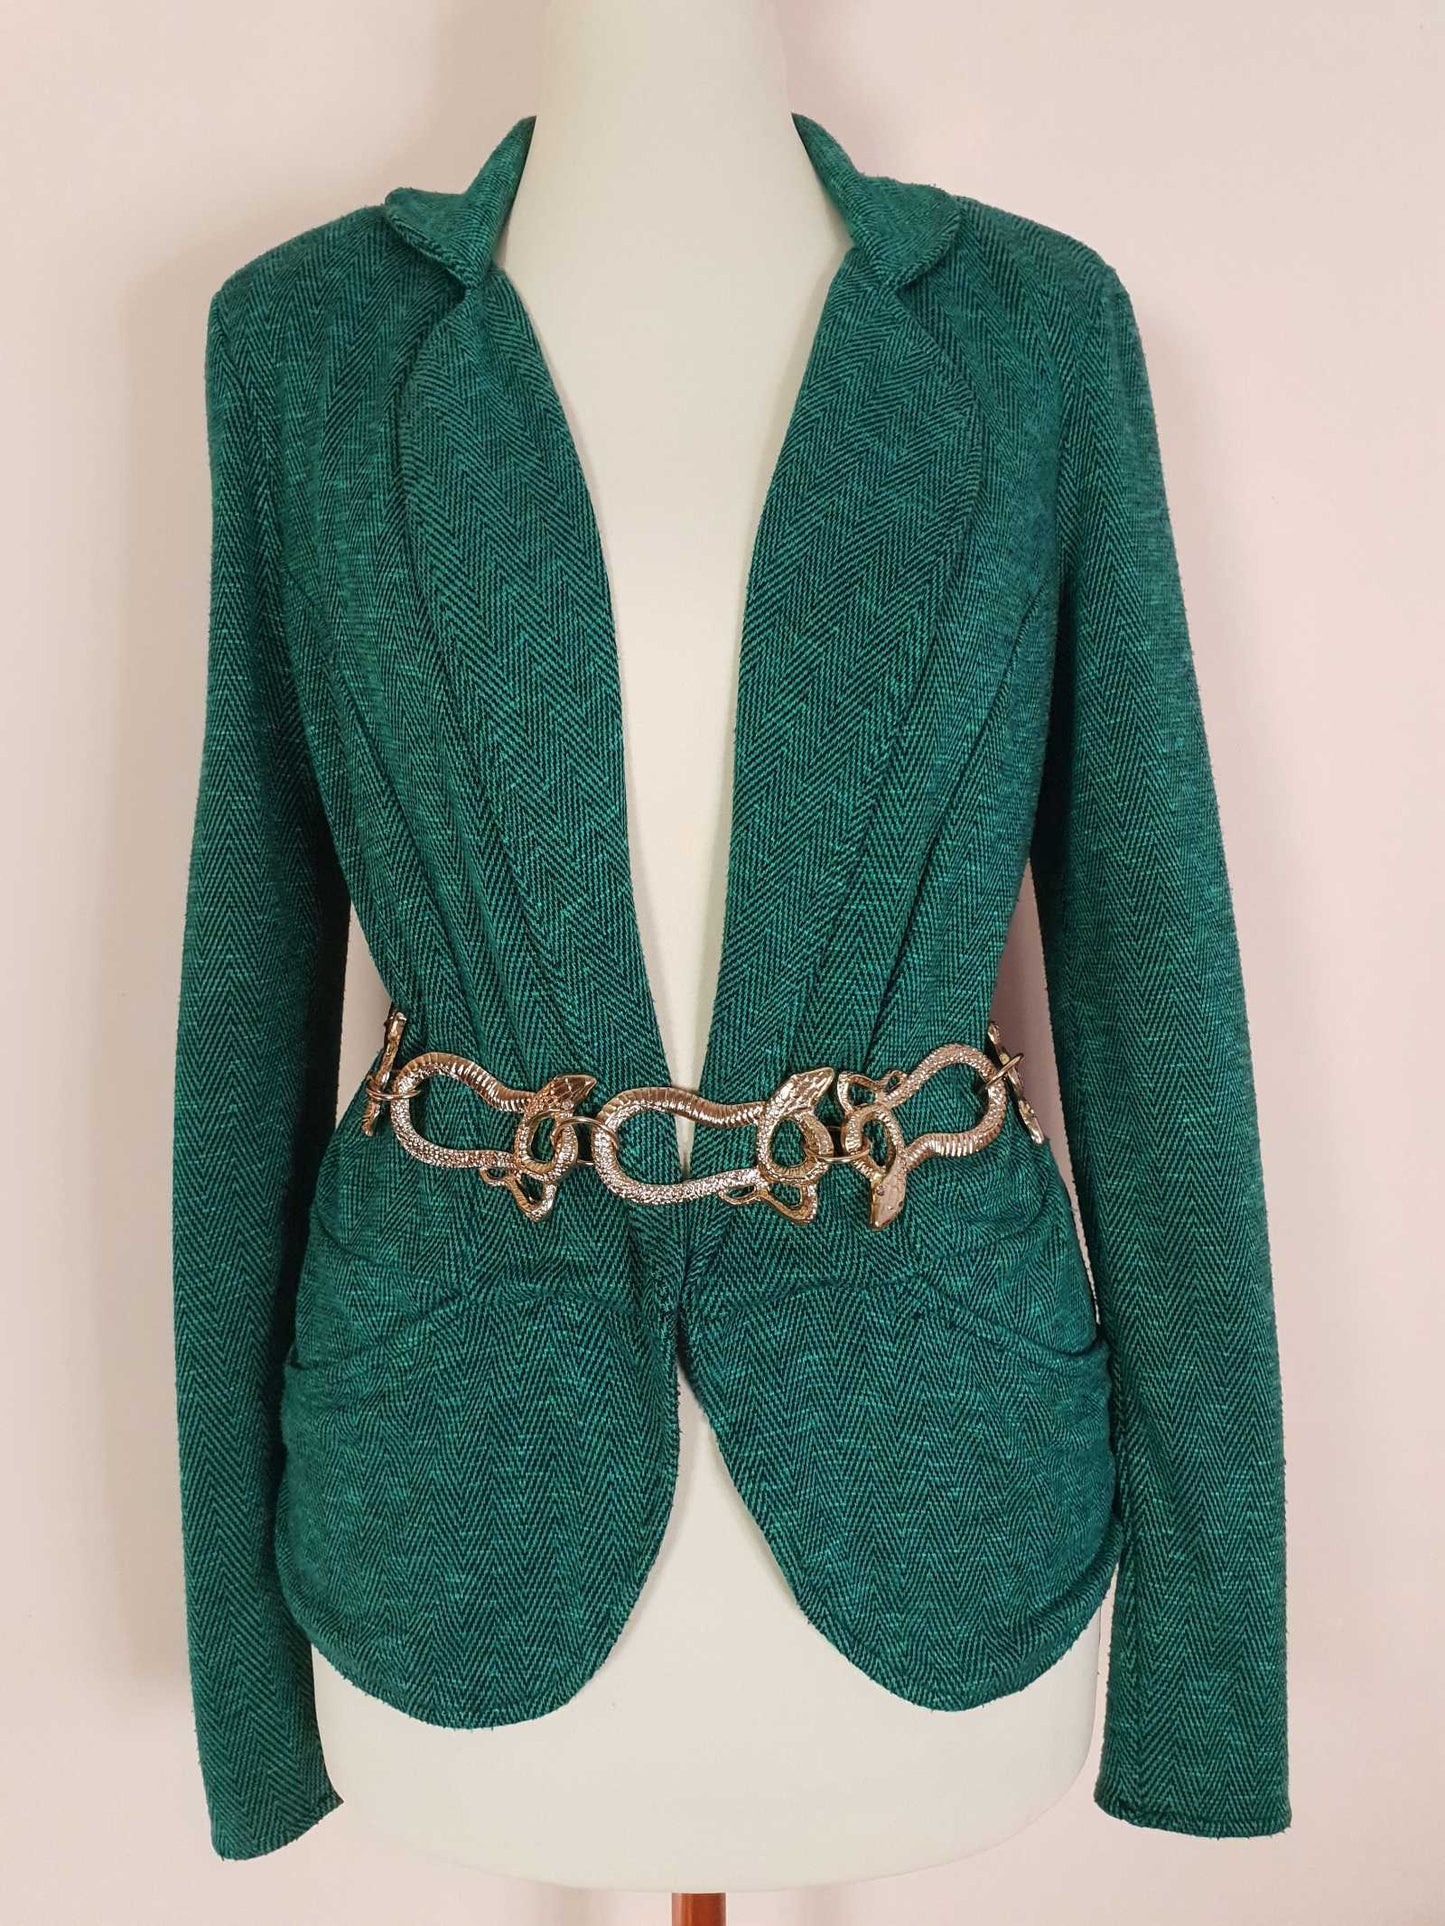 Vintage 90s Green Jacket Size 8 Blazer